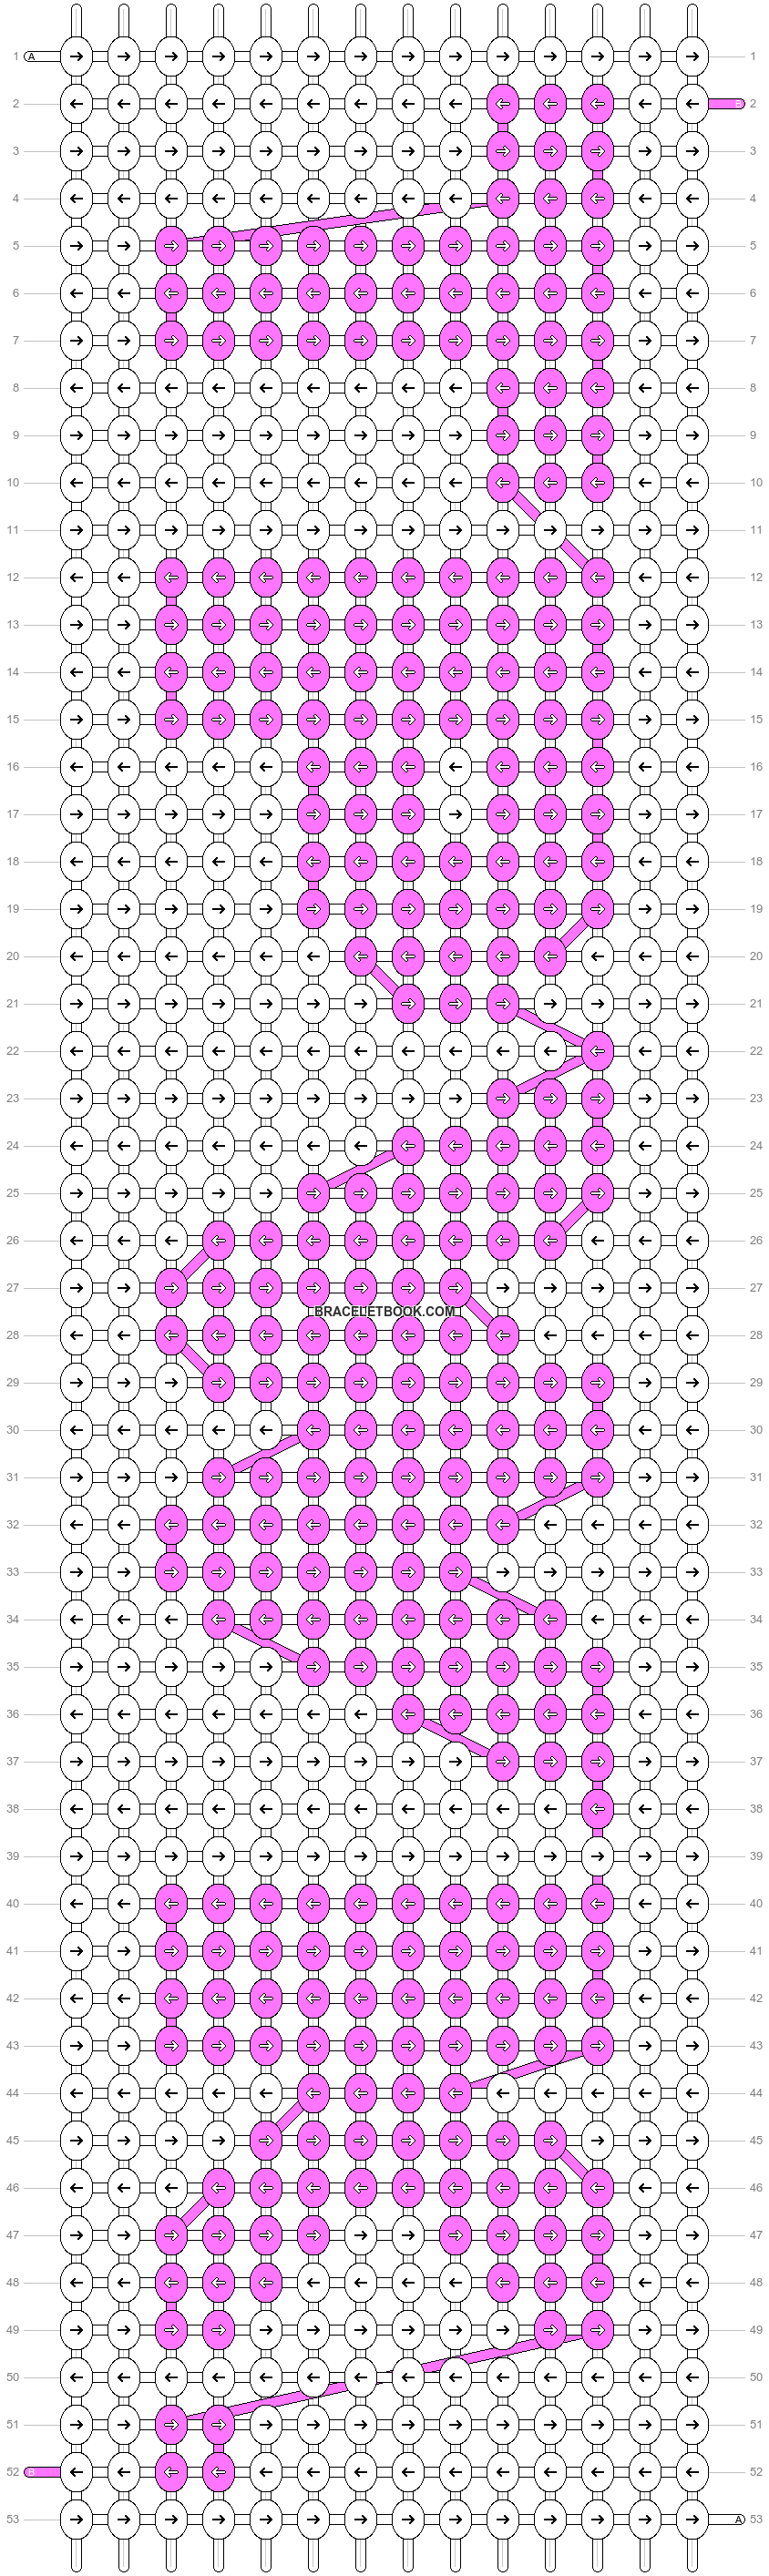 Alpha pattern #38816 variation #55527 pattern